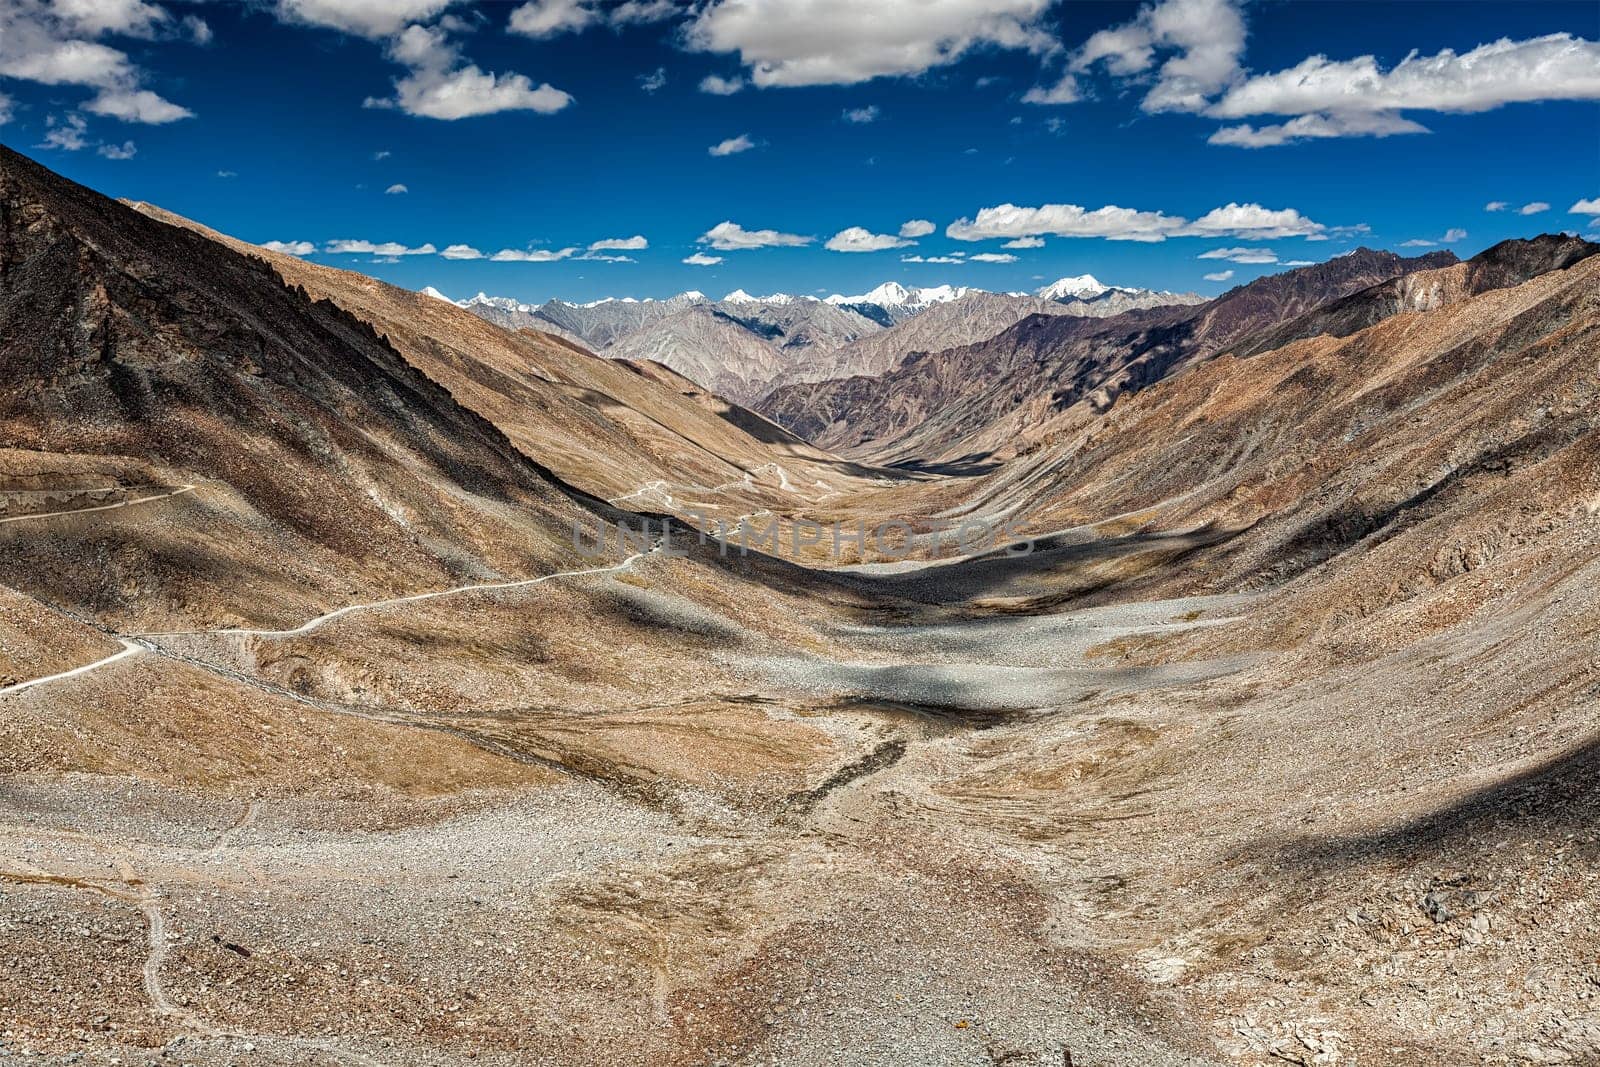 View of Karakoram range and road in valley in Himalayas by dimol